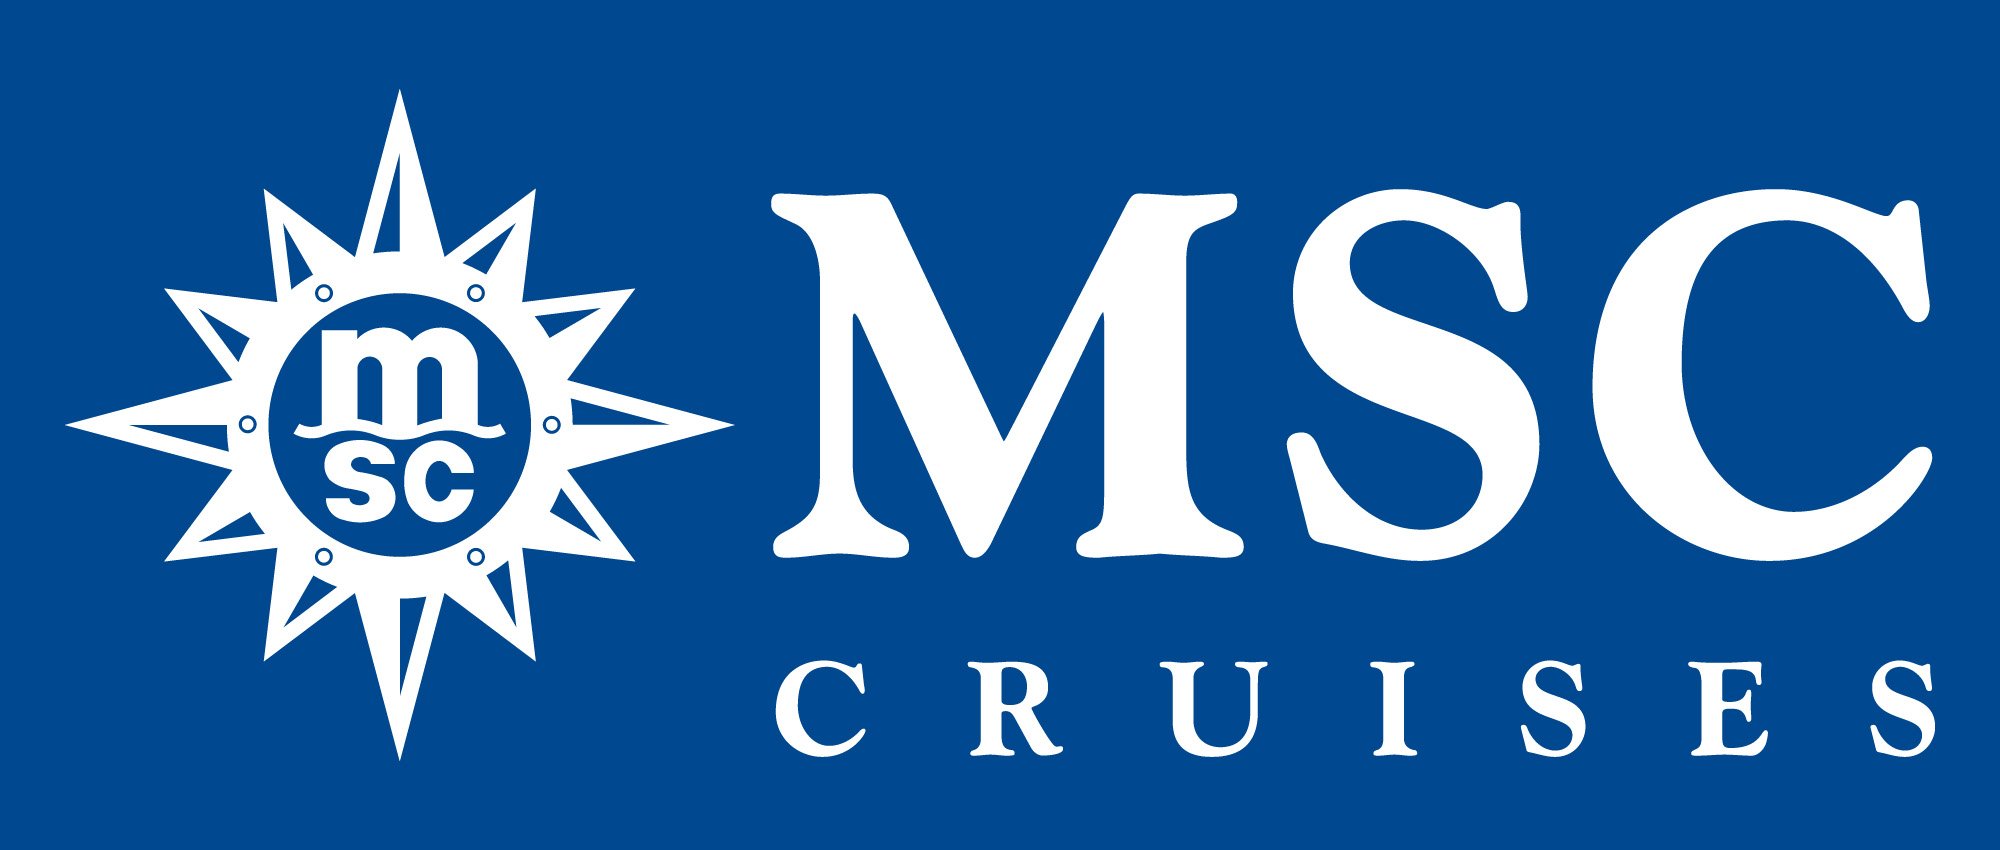 MSC-symbol.jpg